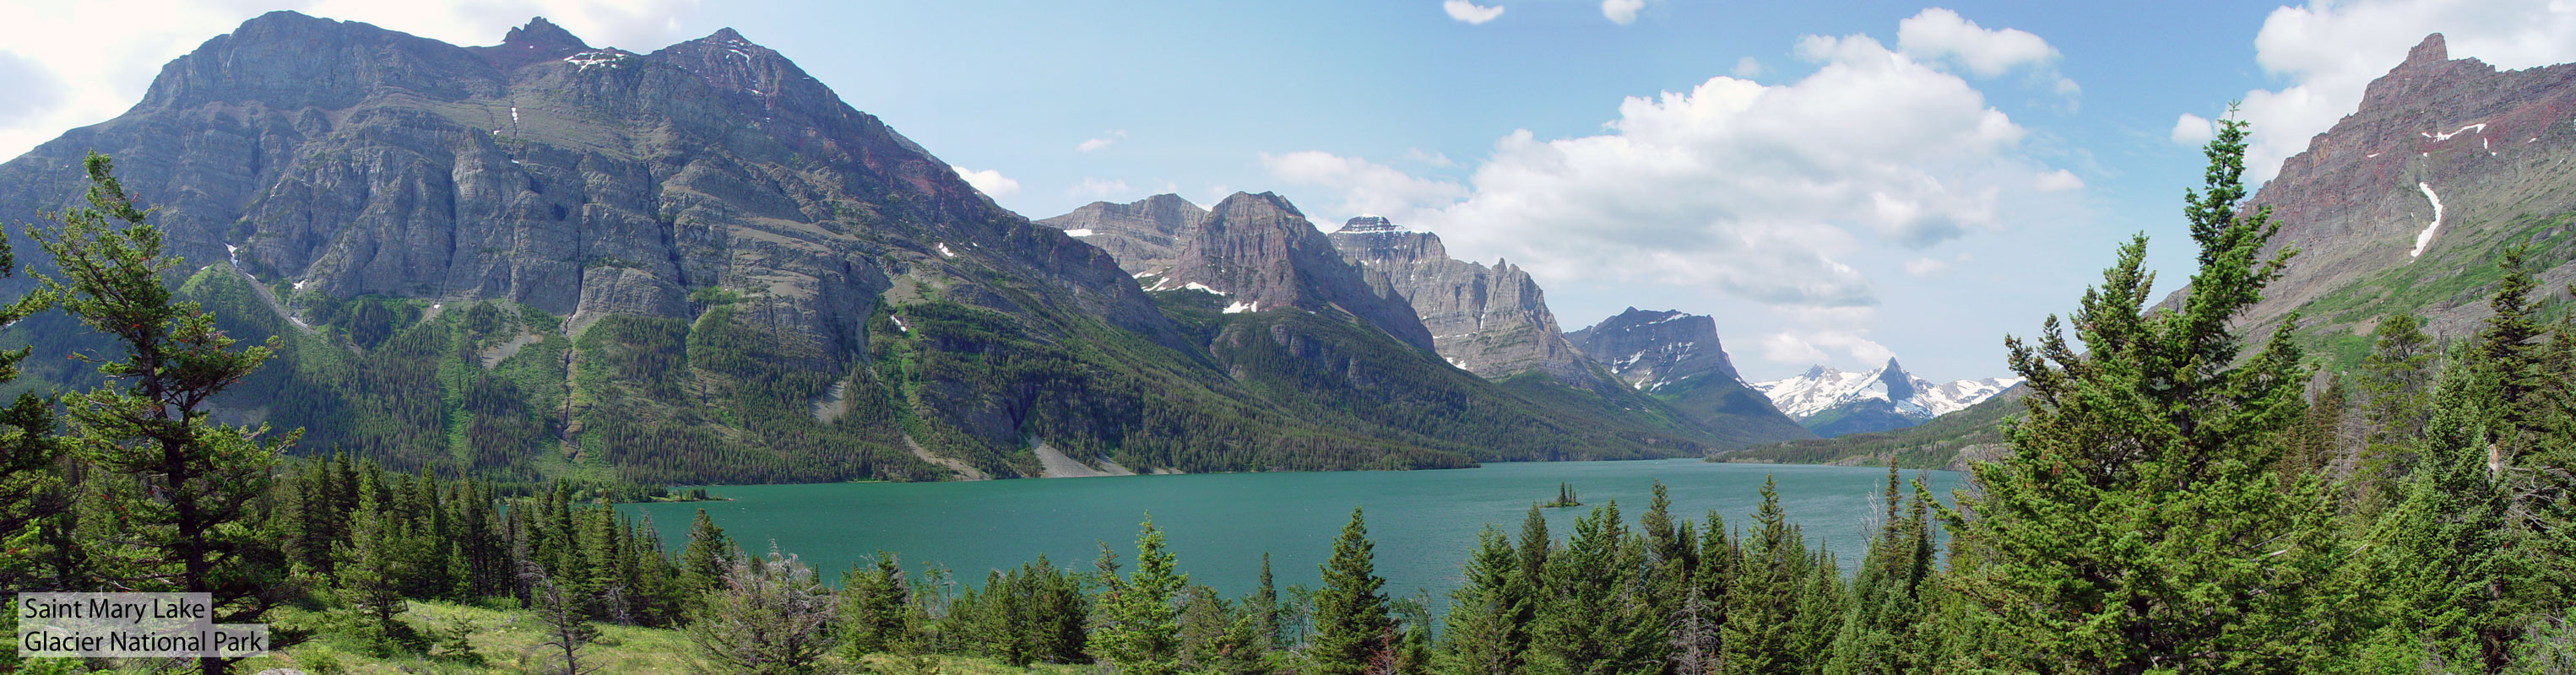 Saint Mary Lake with Wild Goose Island Glacier National Park